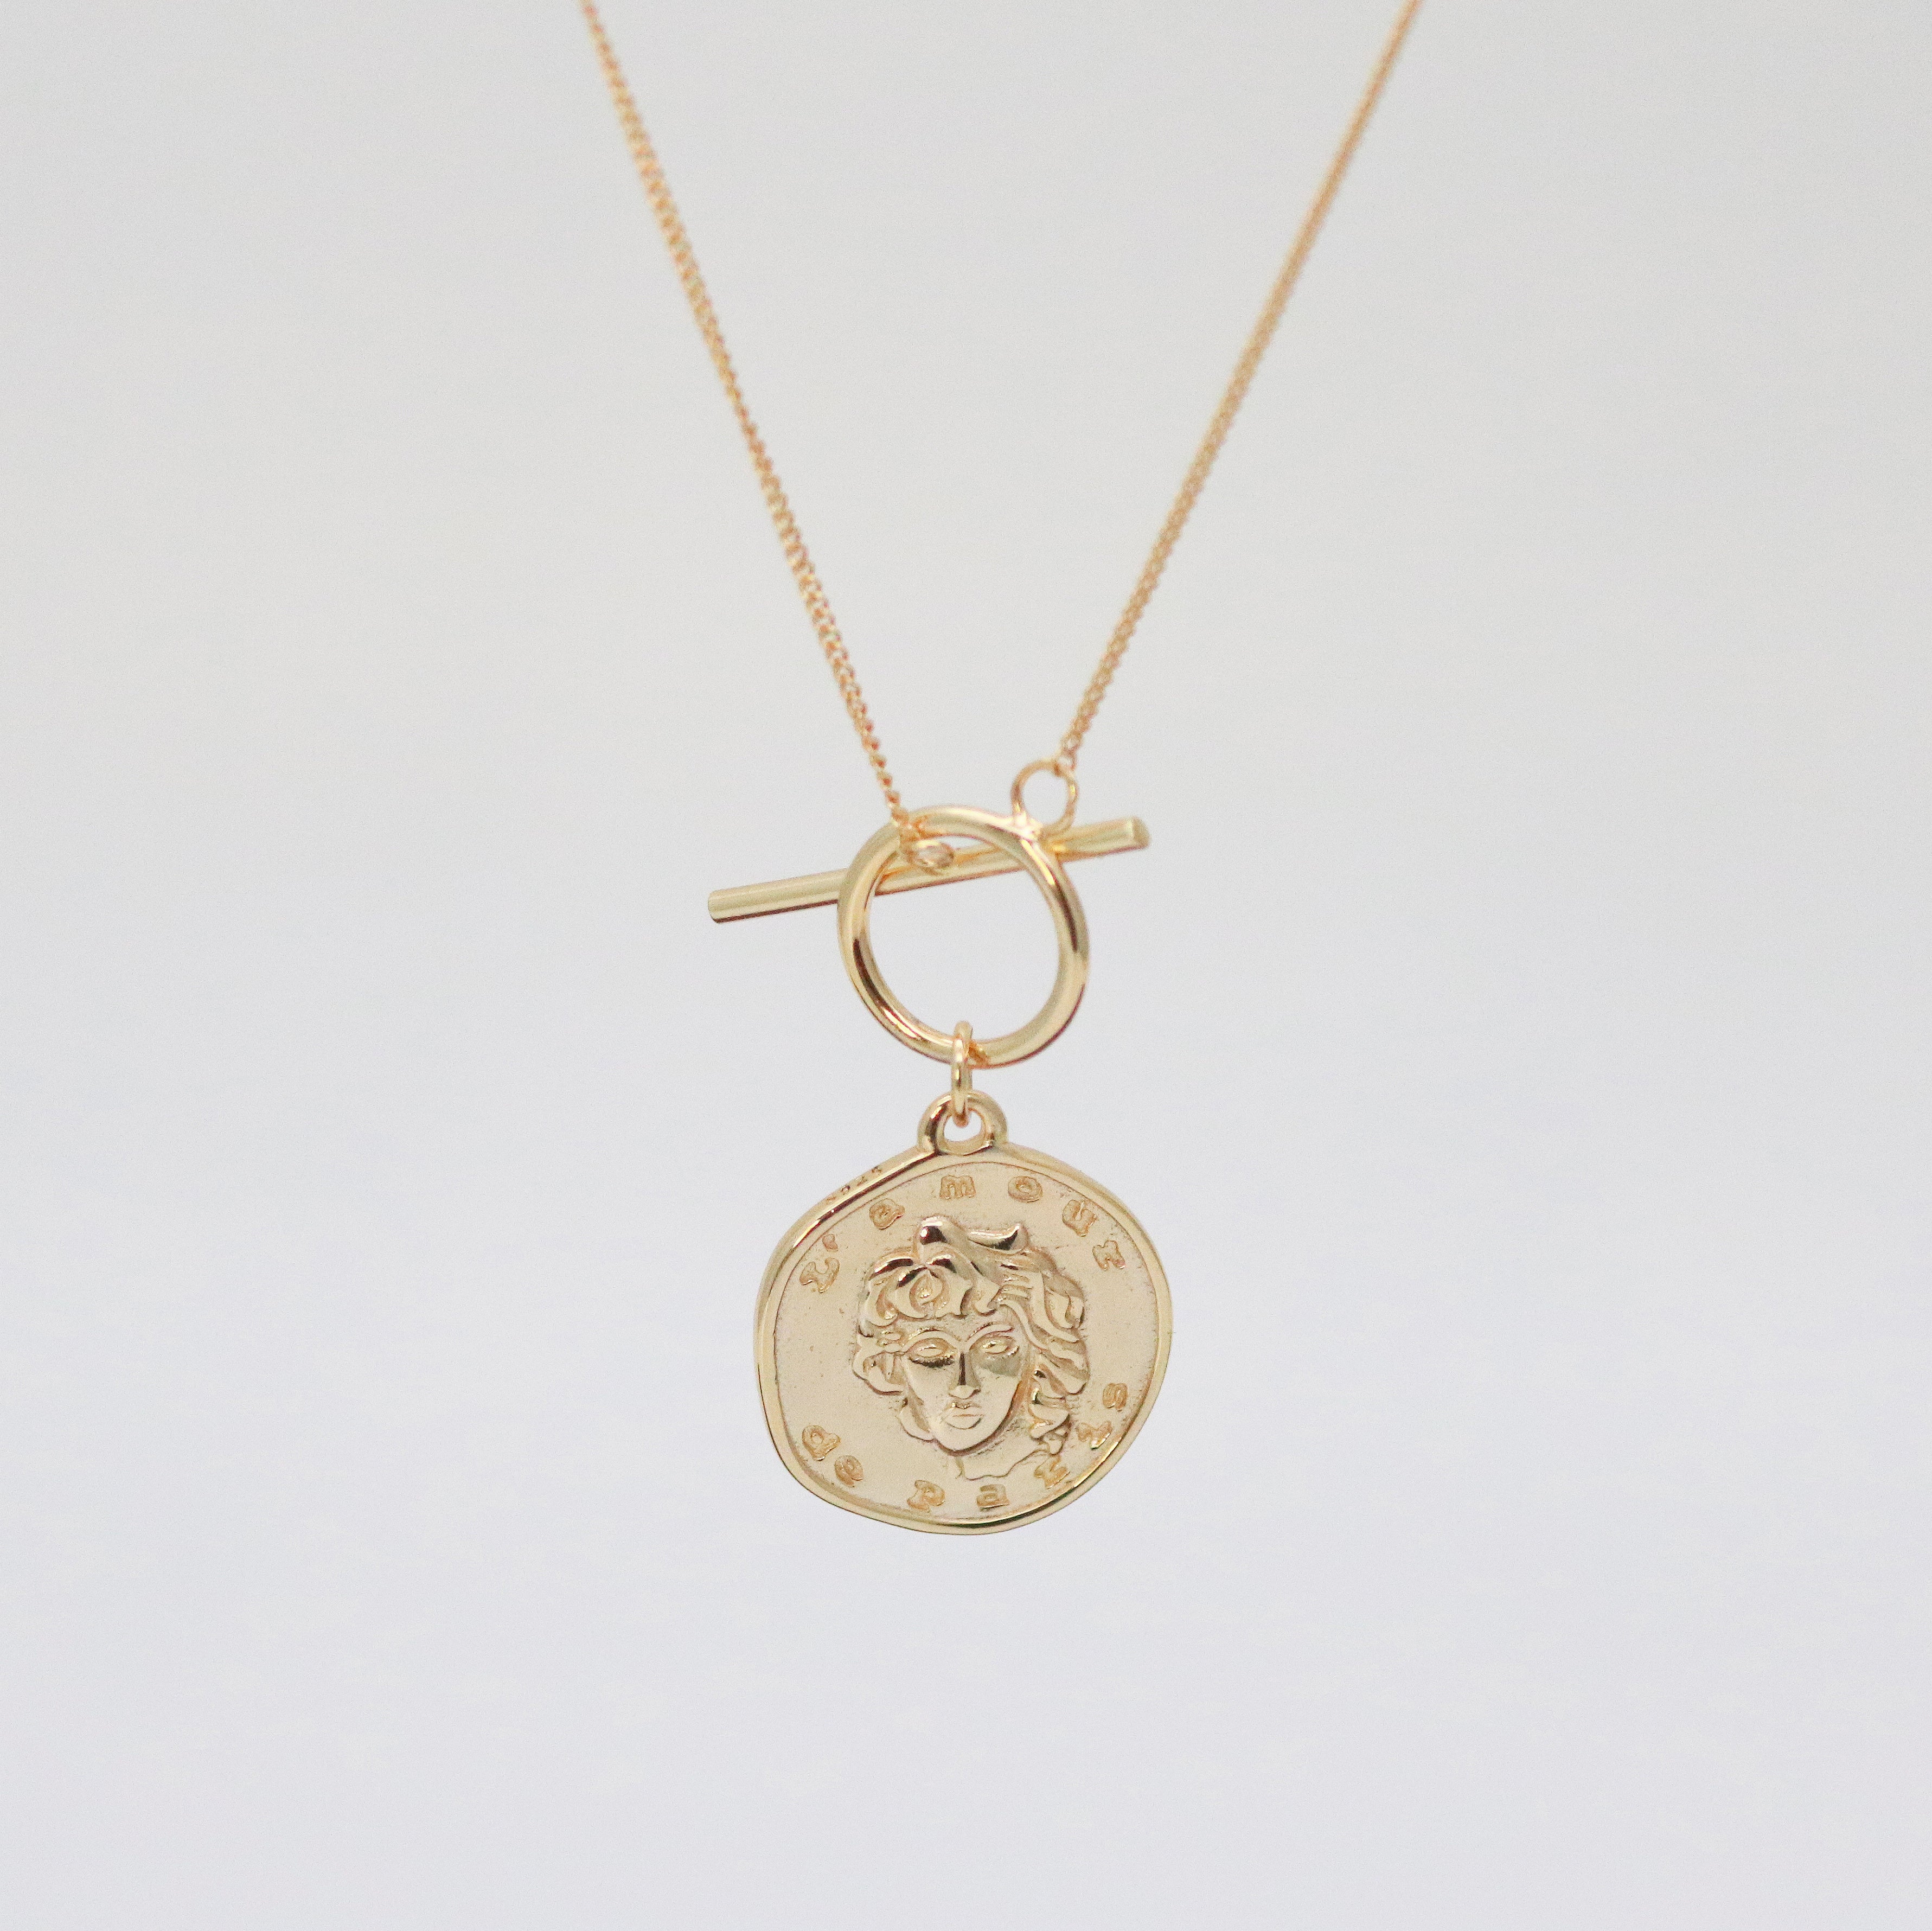 Meideya Jewelry - Medusa layering necklace